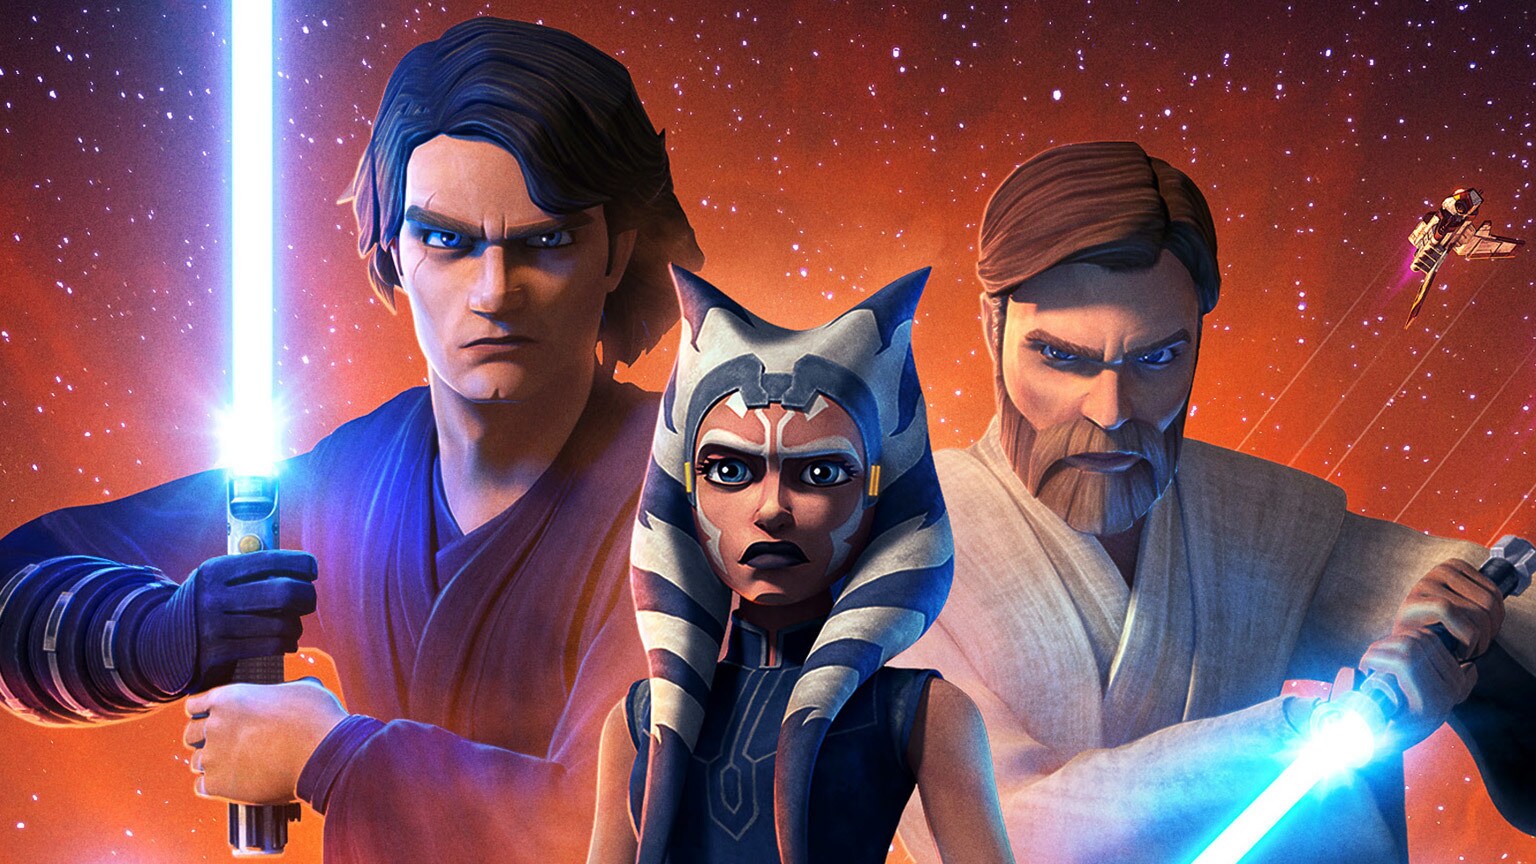 Star Wars: The Clone Wars Returns on Disney+ February 21